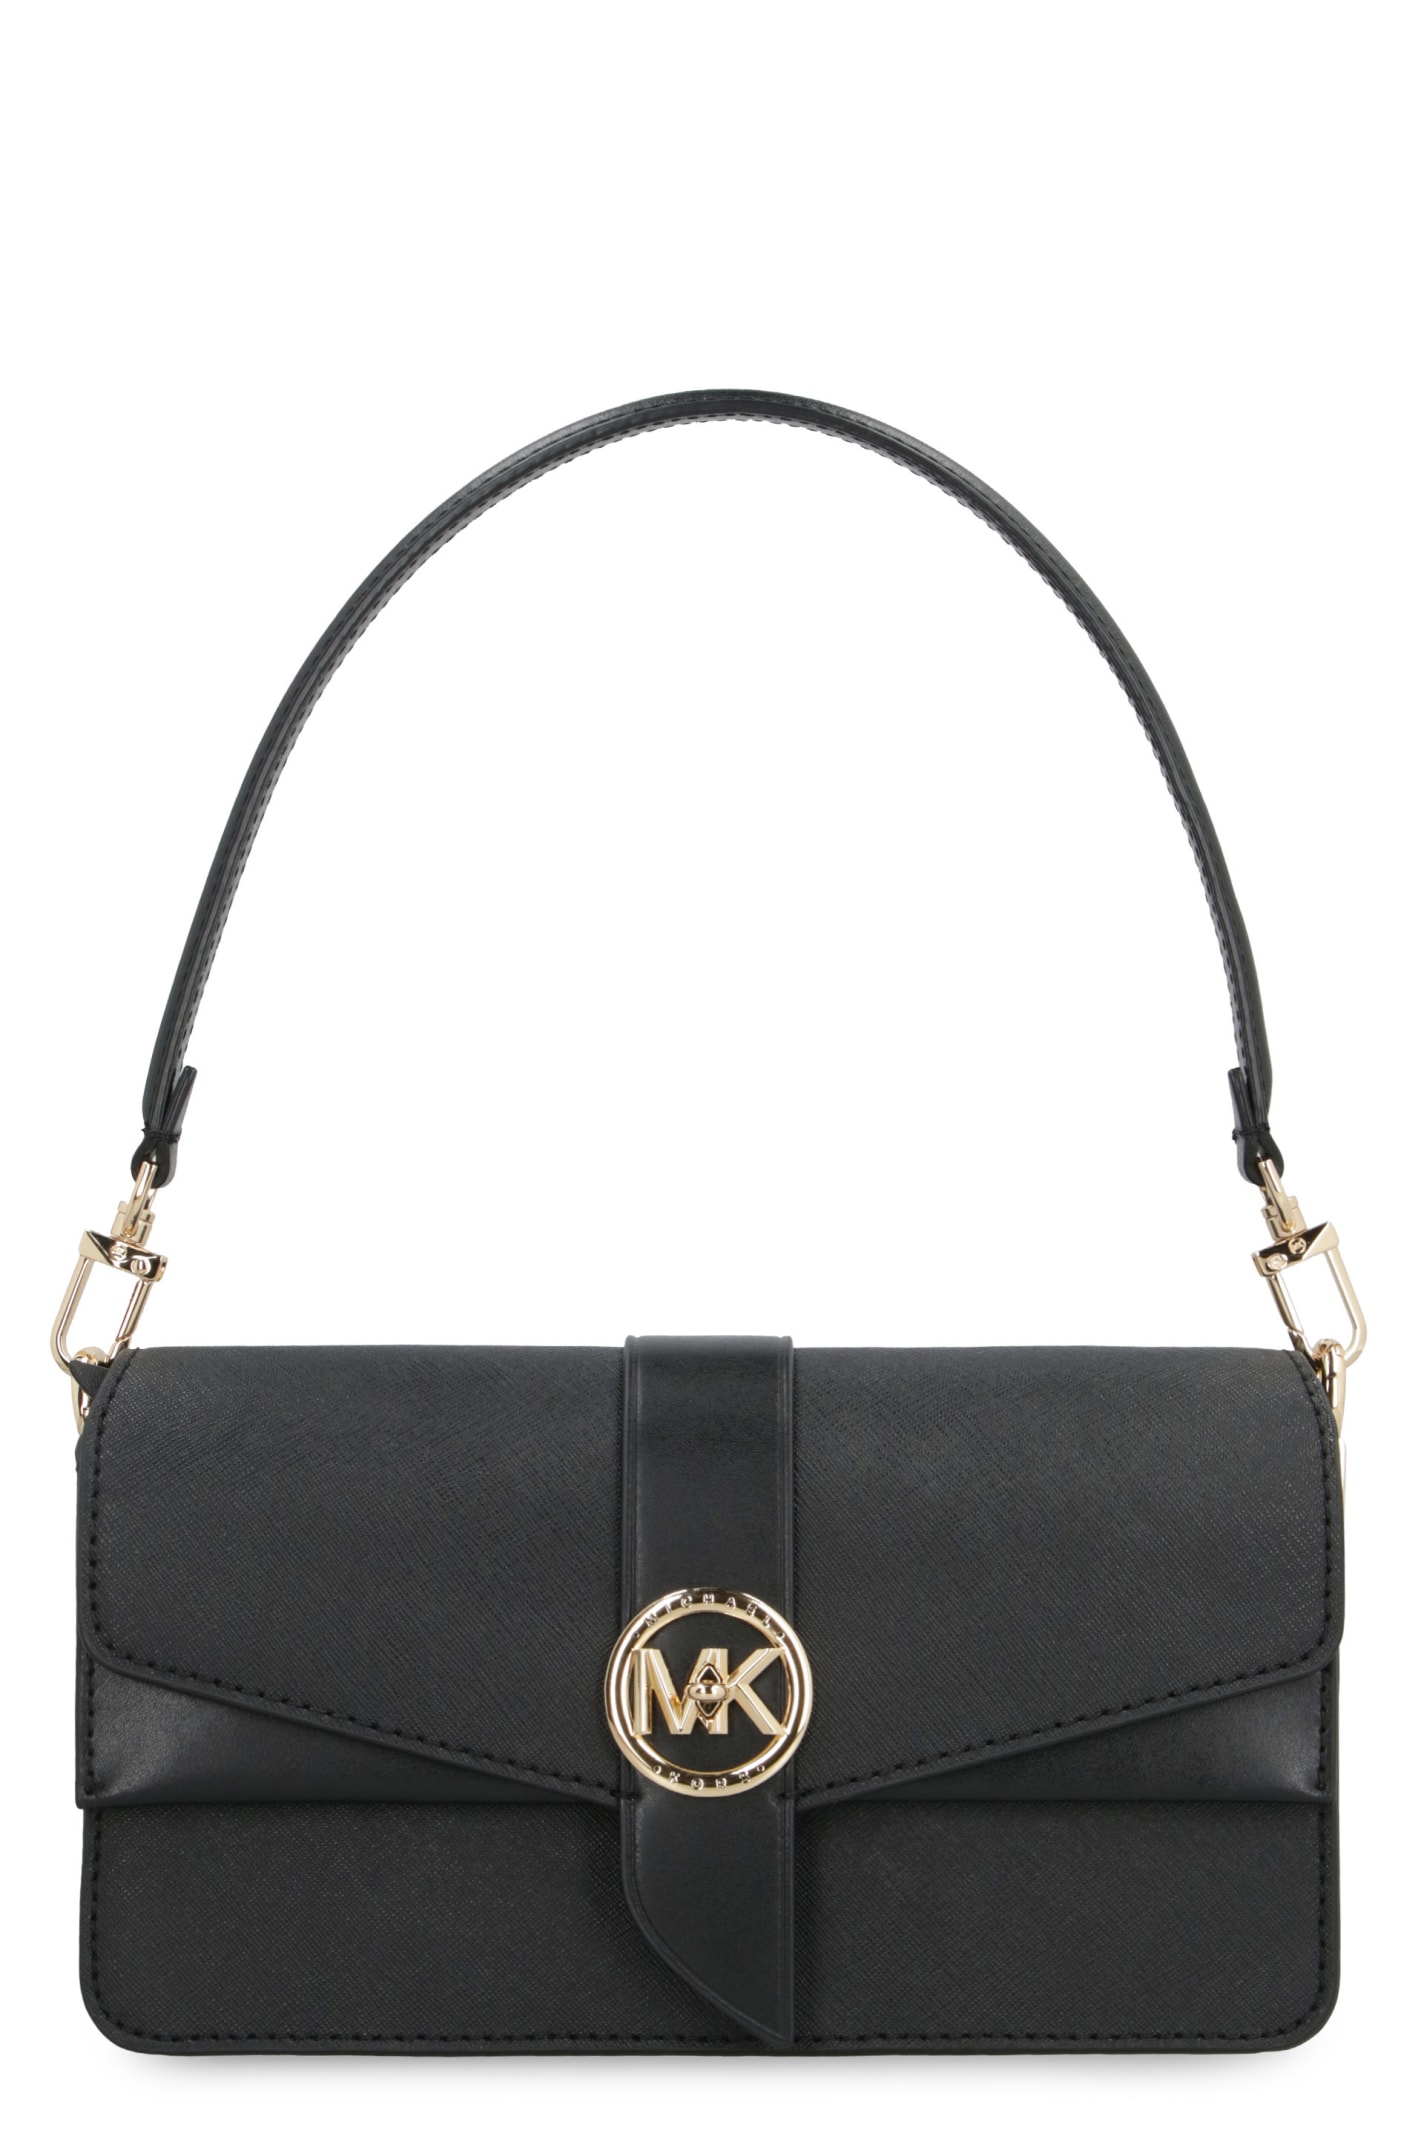 MICHAEL Michael Kors Greenwich Leather Shoulder Bag